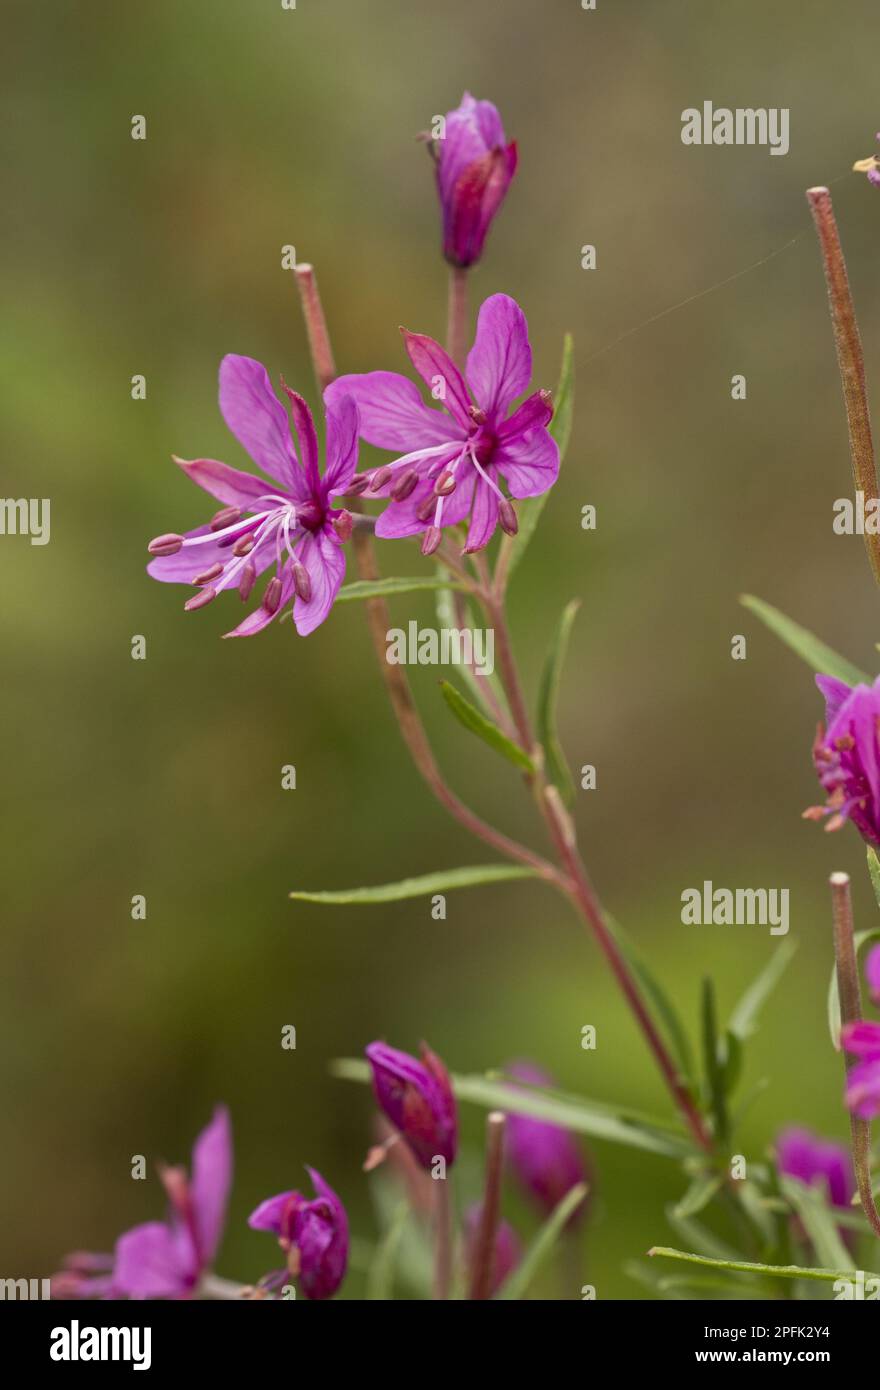 Rosemary willowherb (Epilobium dodonaei), Evening primrose family, Alpine willowherb flowering, French Alps, France Stock Photo